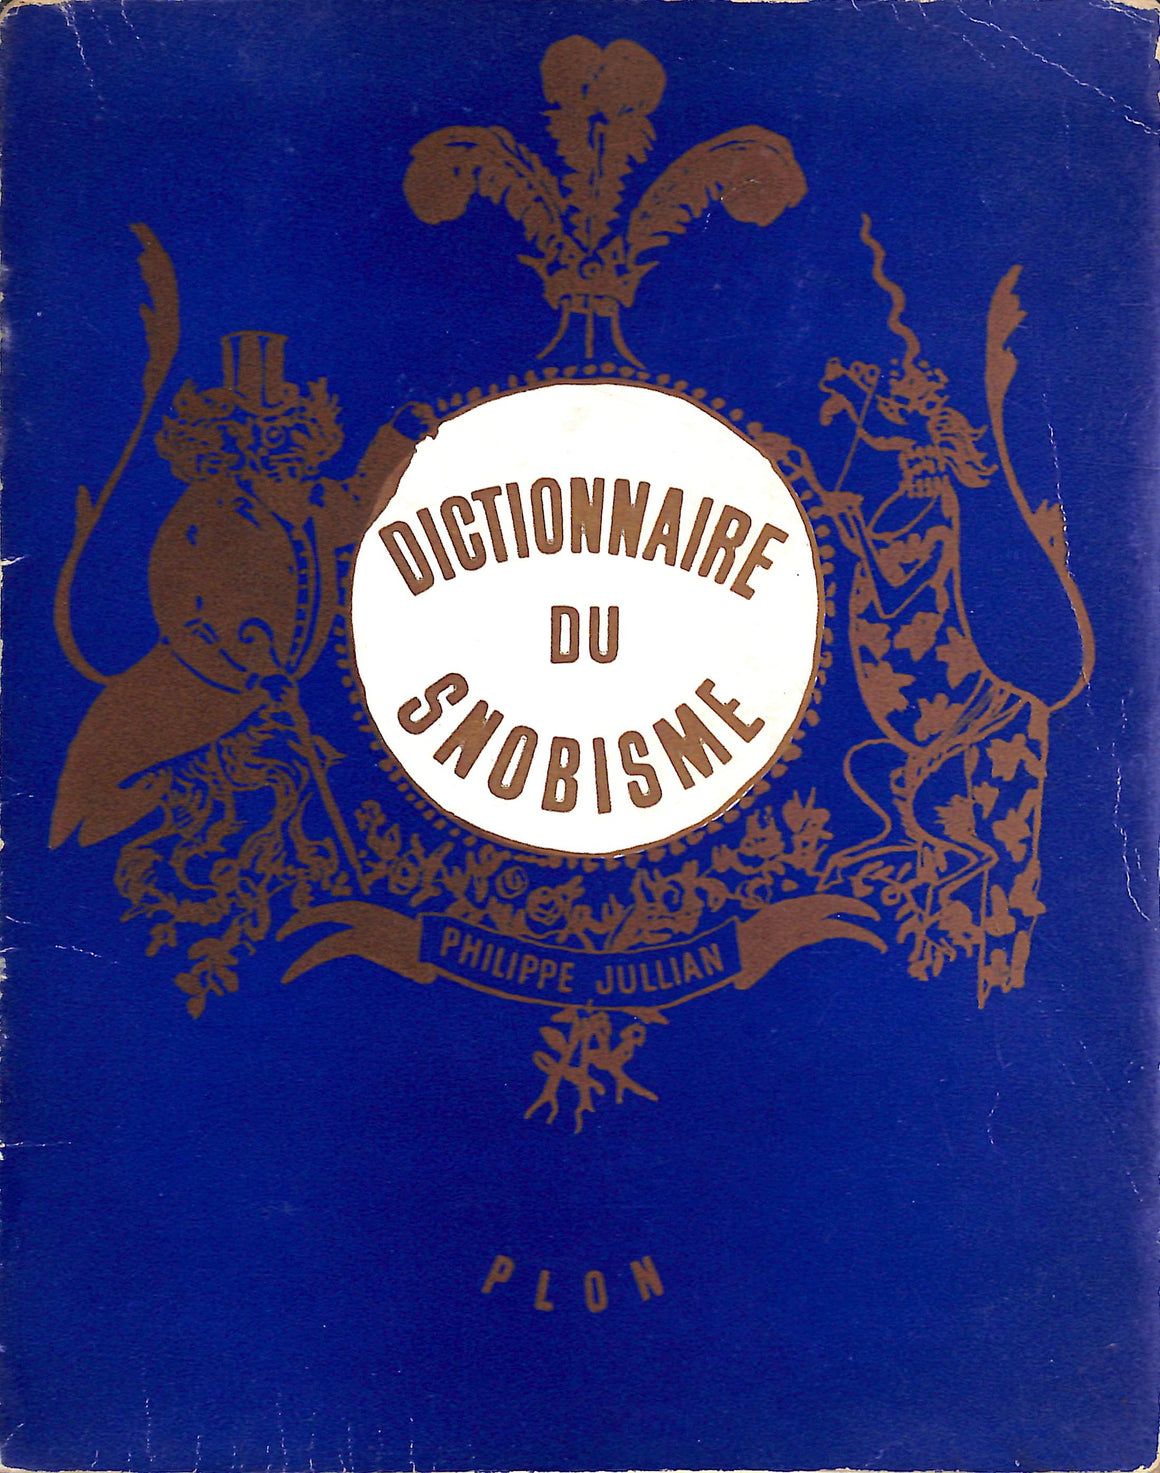 "Dictionnaire Du Snobisme" 1958 JULLIAN, Philippe